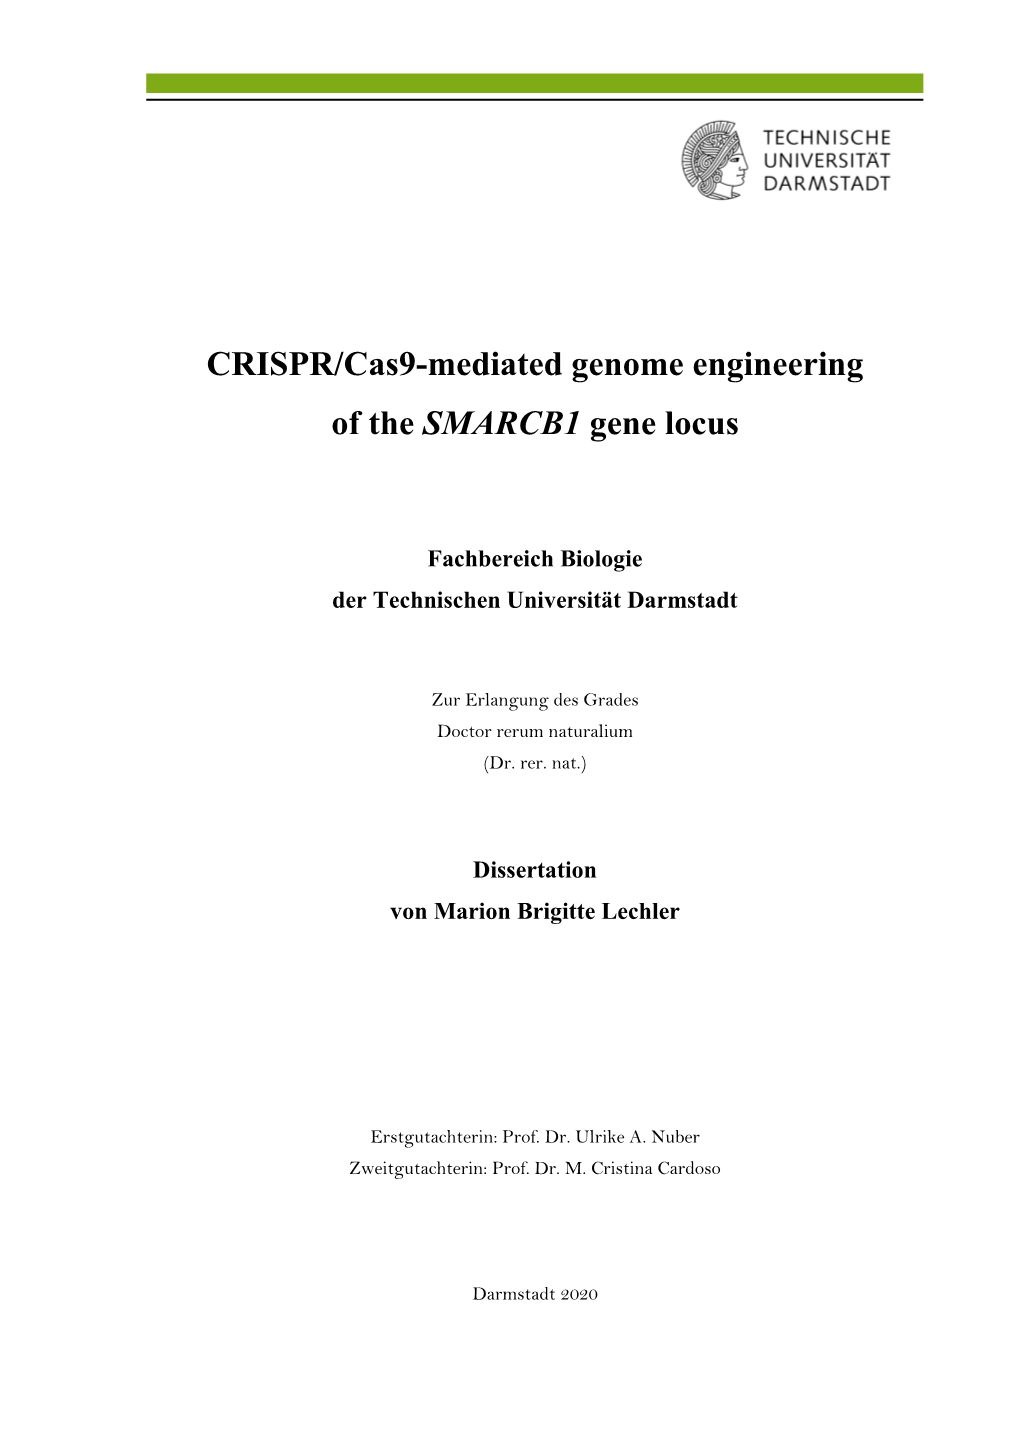 CRISPR/Cas9-Mediated Genome Engineering of the SMARCB1 Gene Locus